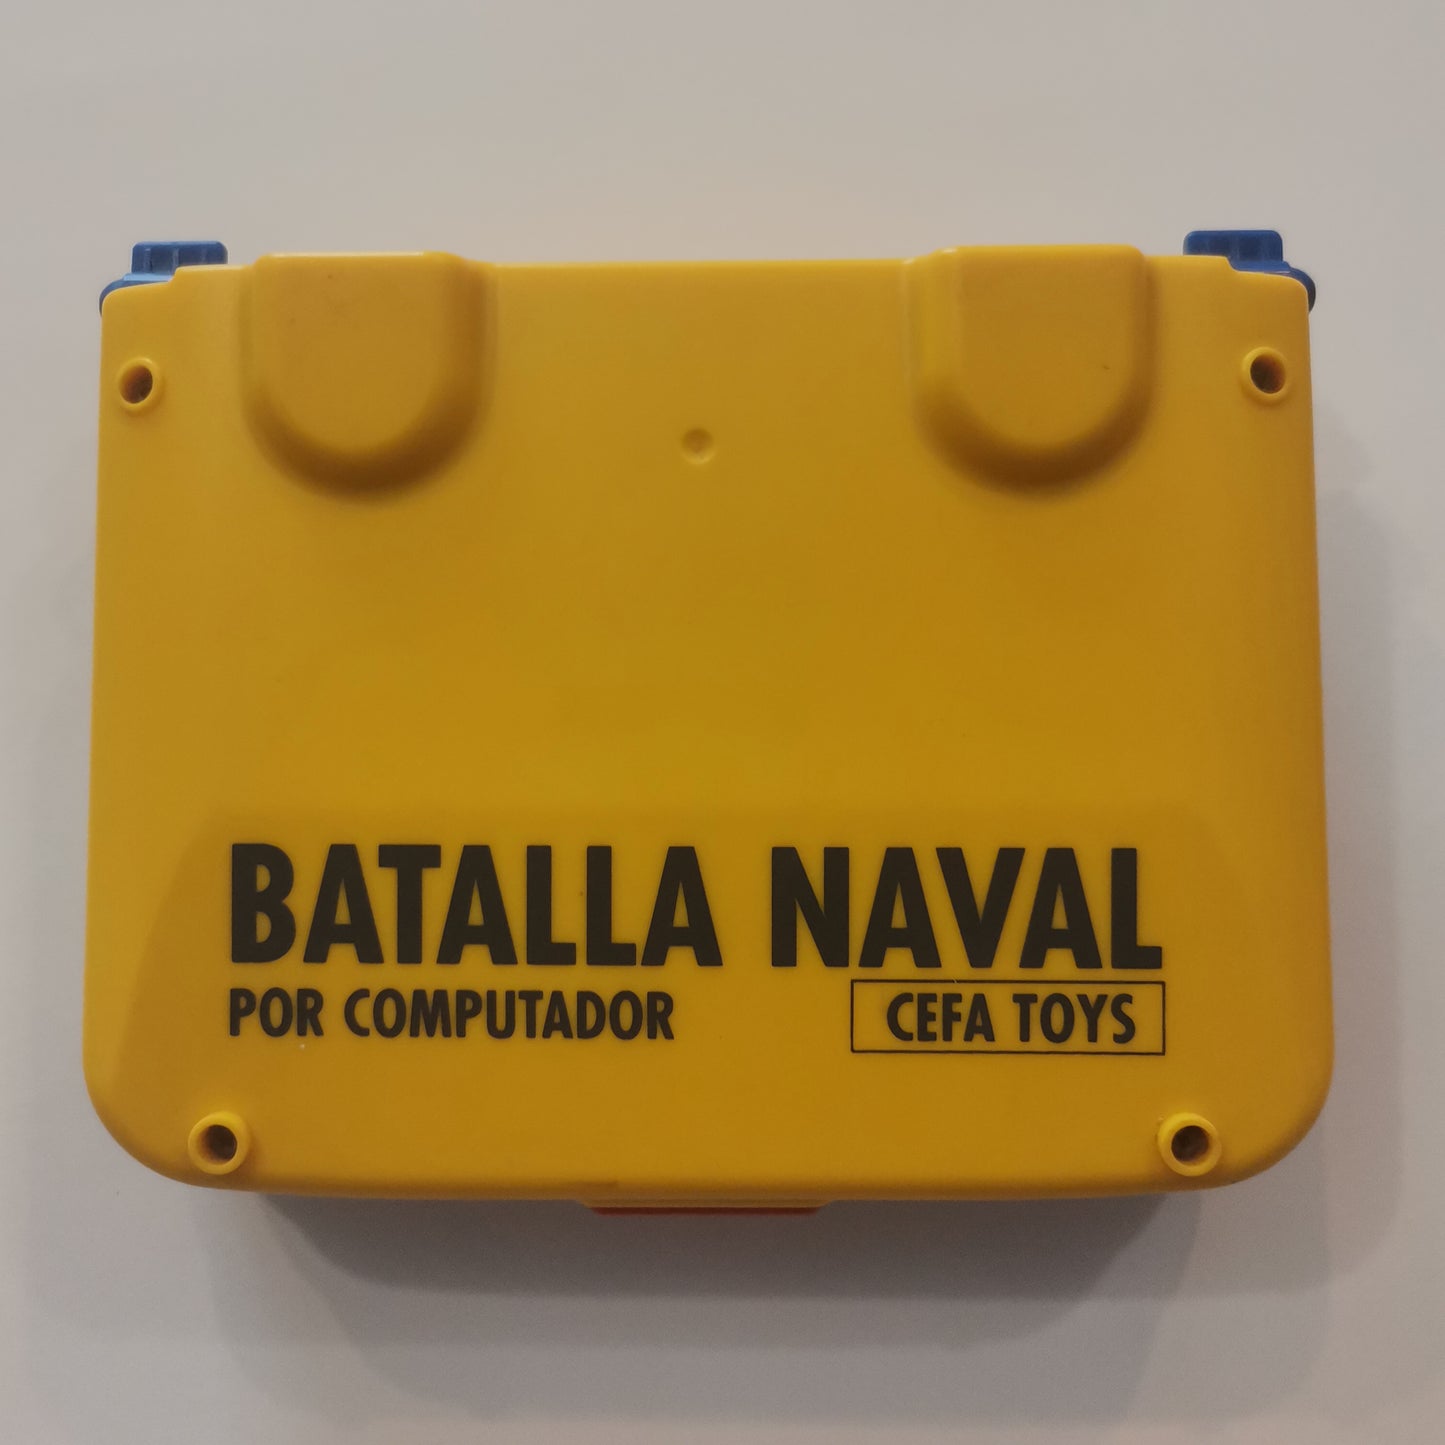 Batalla Naval - Cefa Toys (1992)